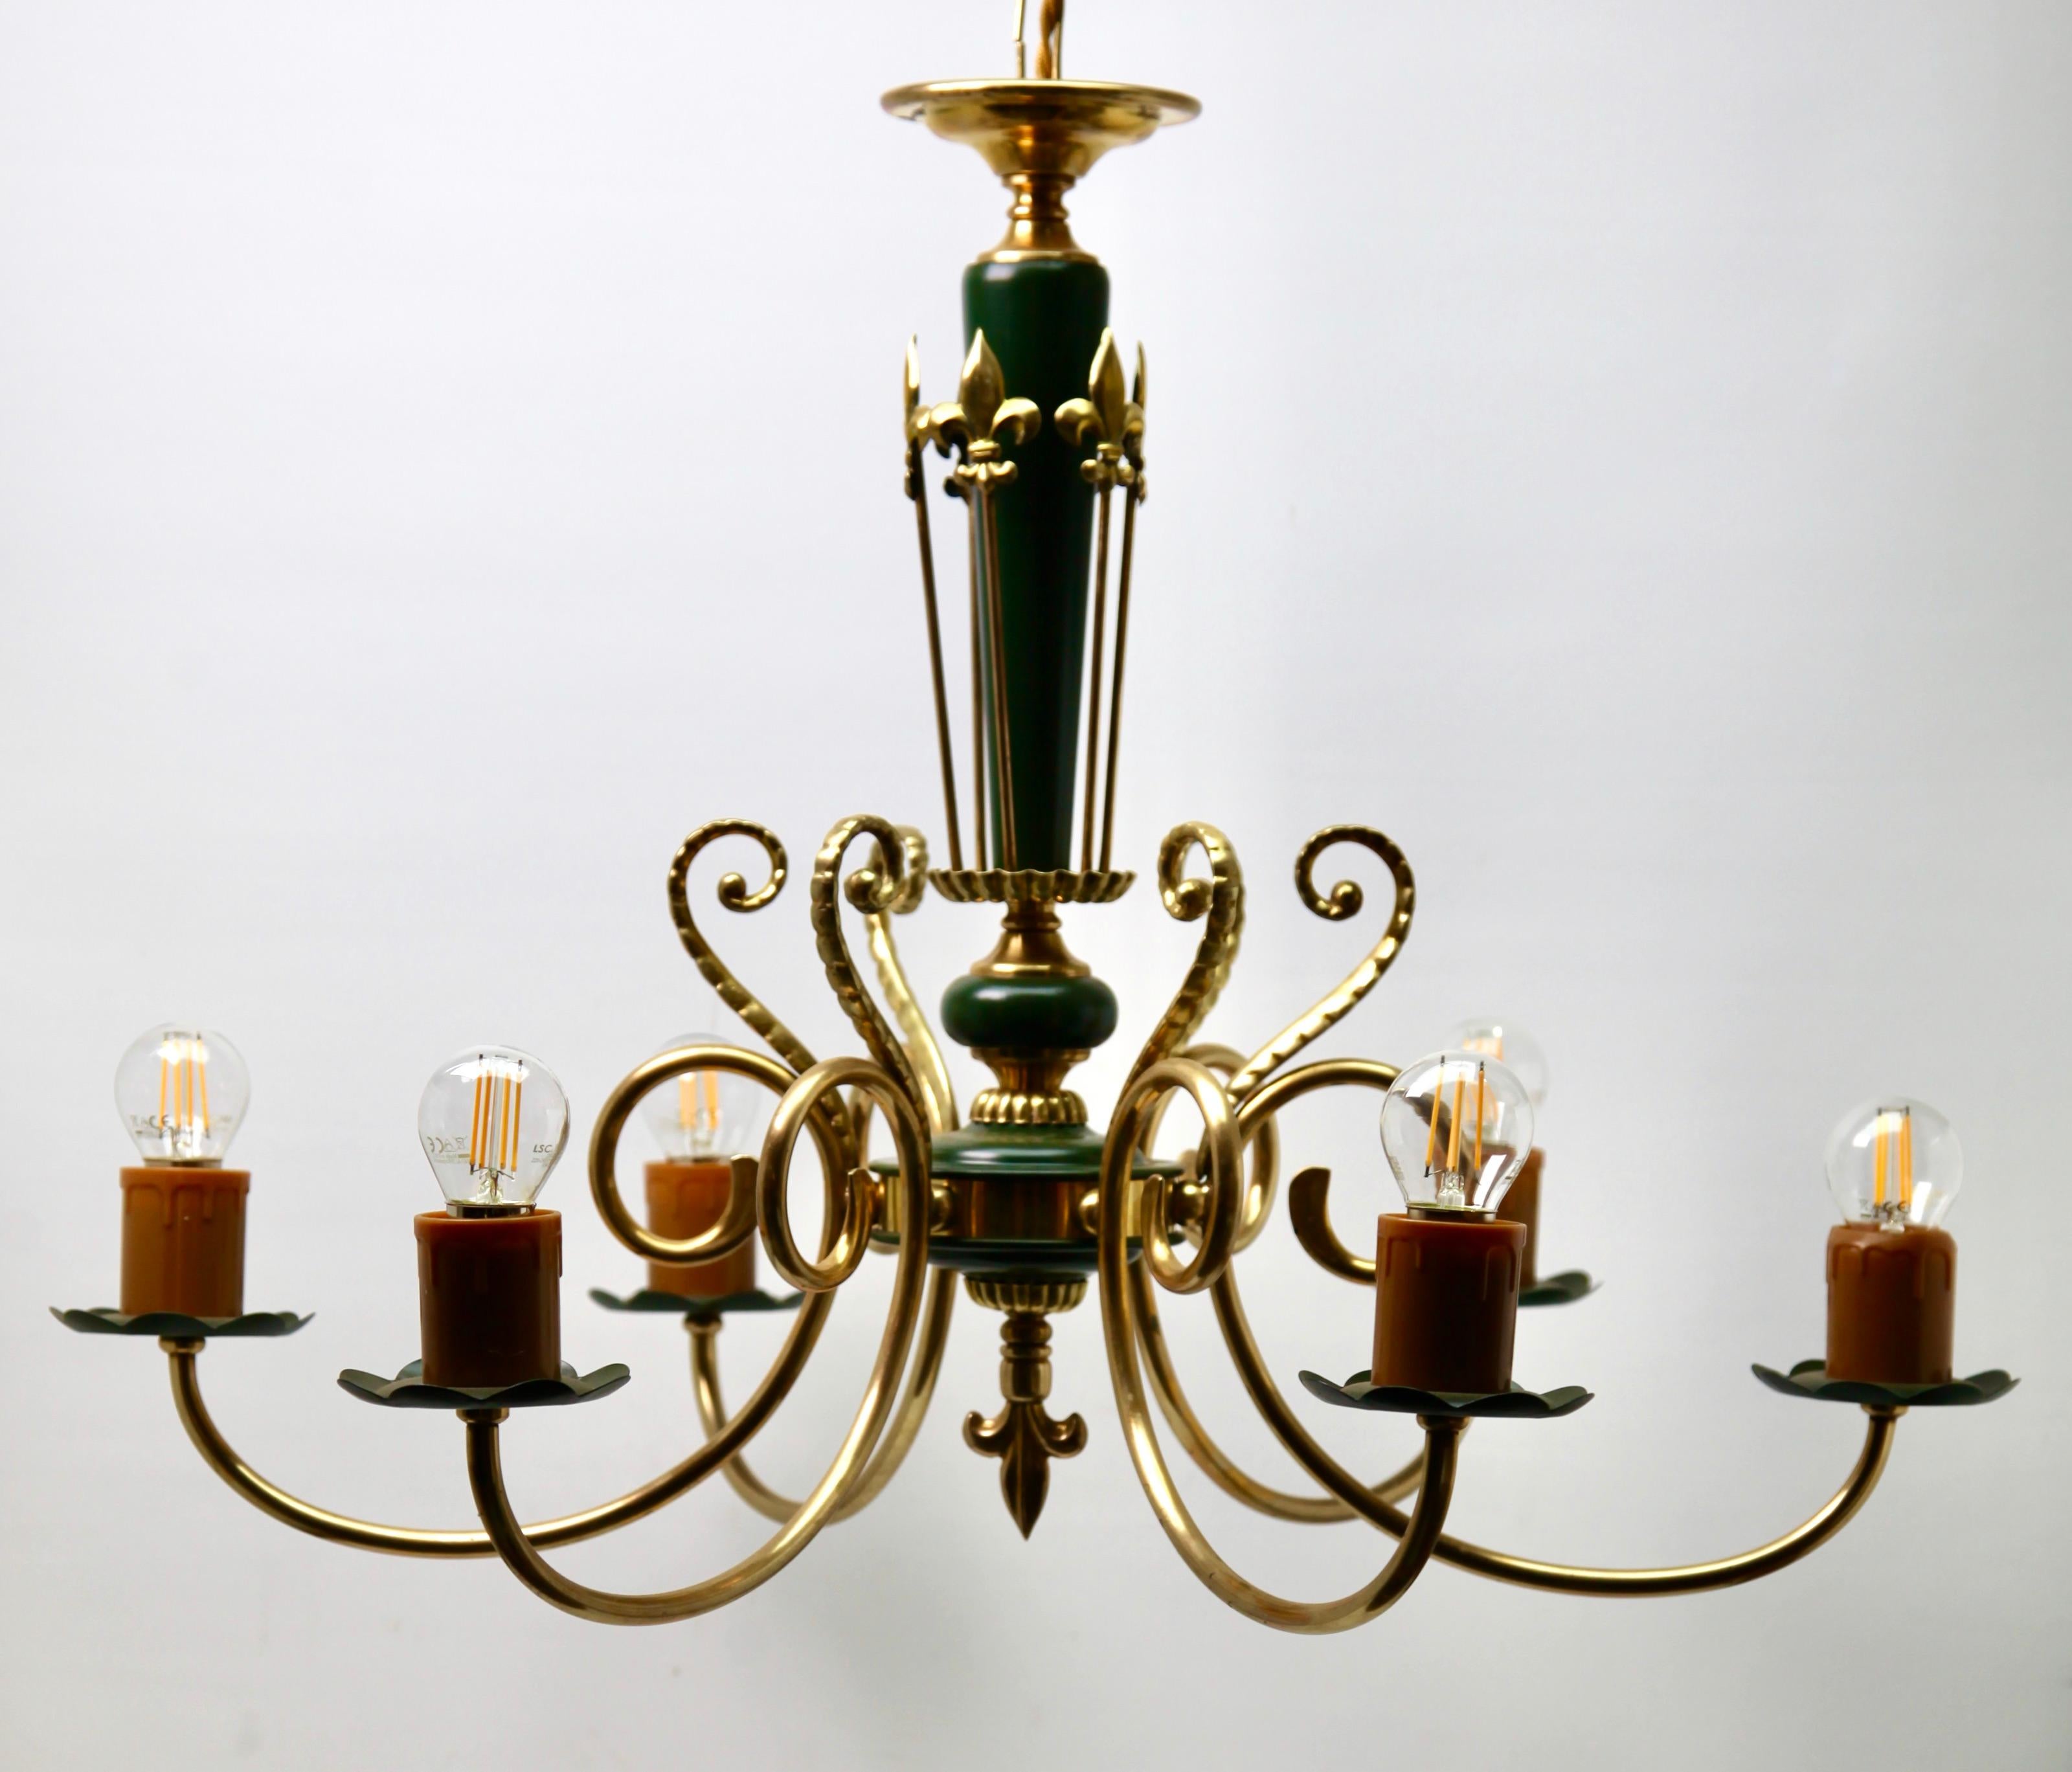 Vintage Chandelier Brass and Wood Decoratief Details Six Arms Belgium, 1950s 2